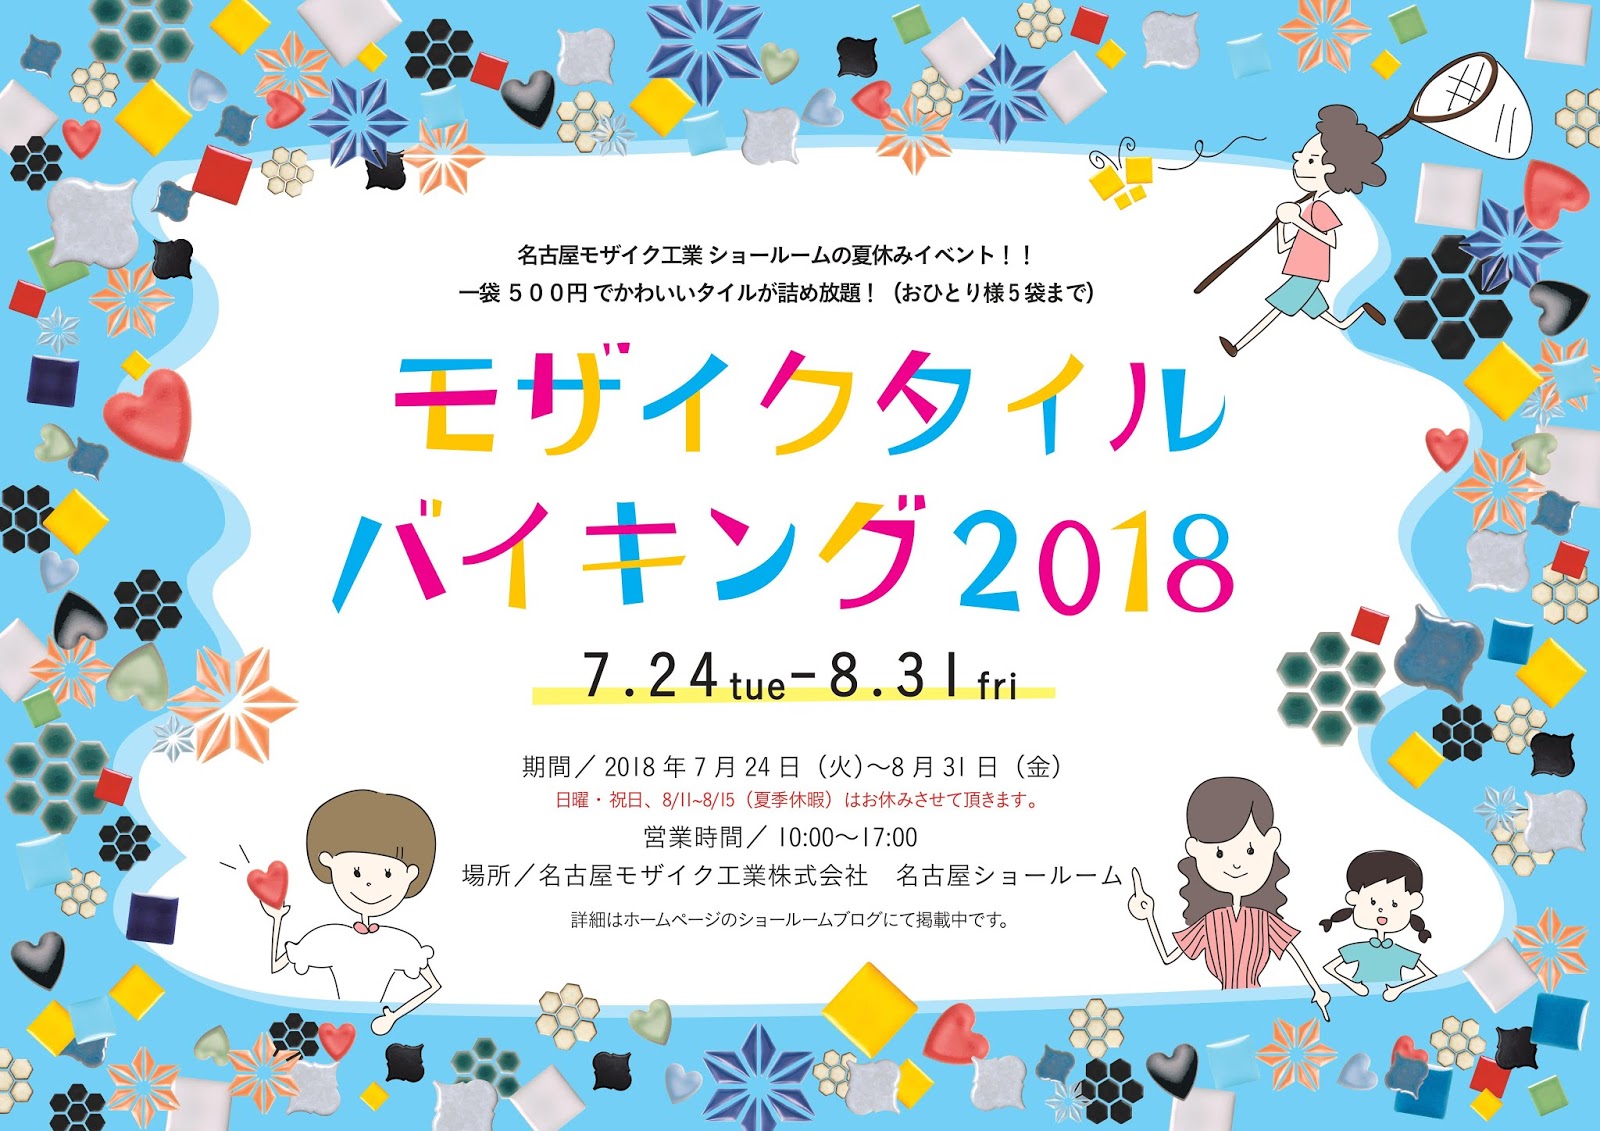 Nagoya Mosaic Nagoya Showroom 開催告知 夏のイベント18 タイルバイキング